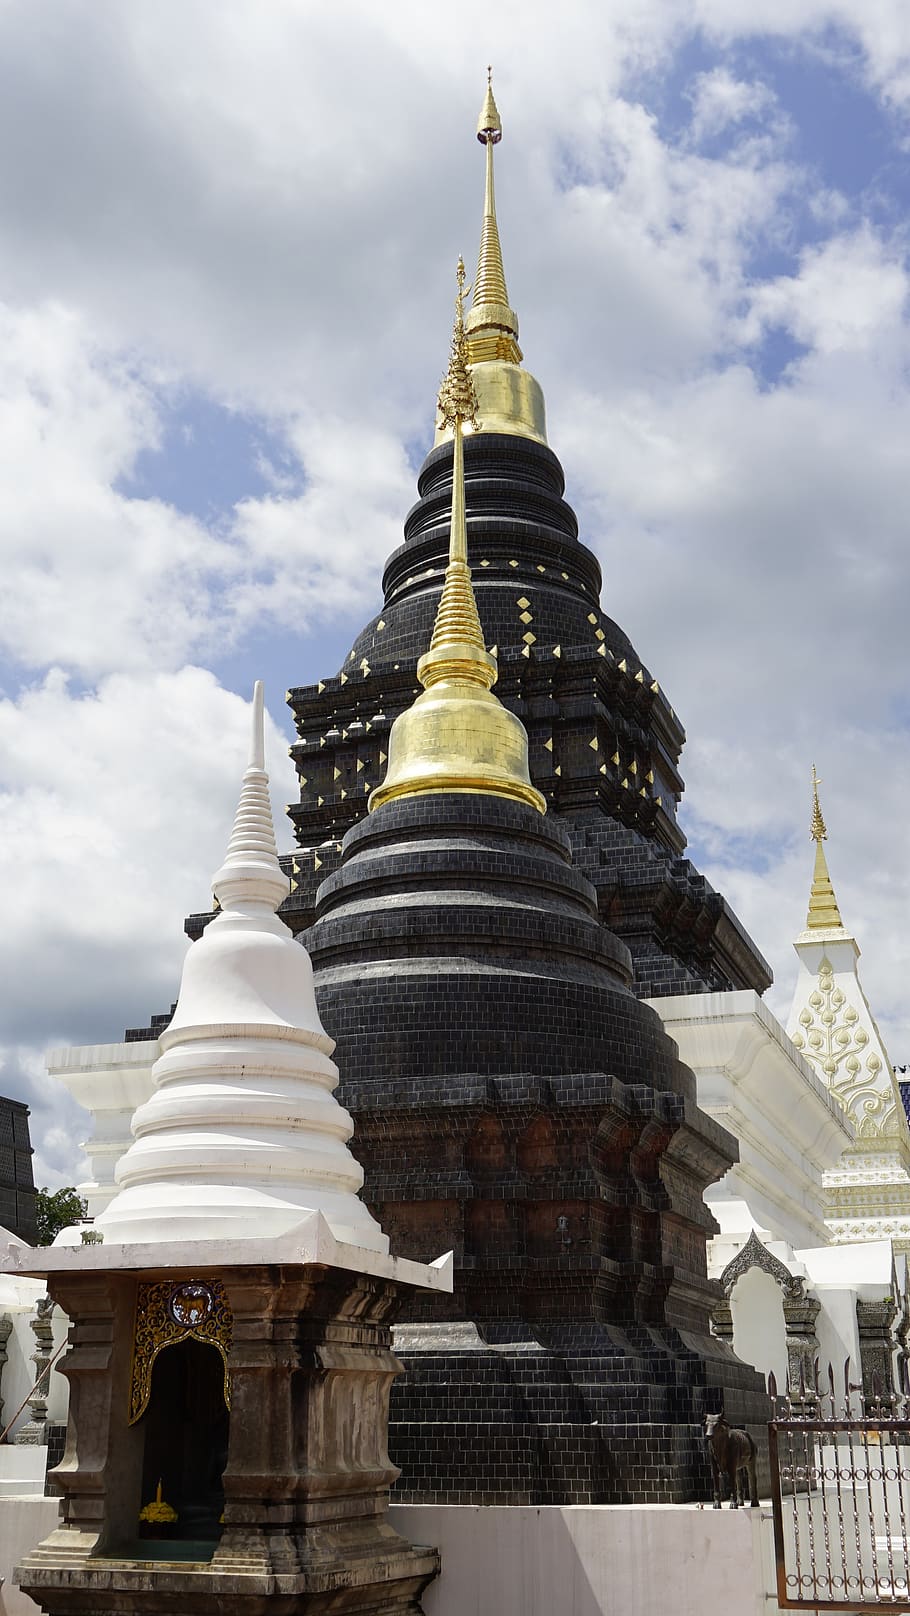 Chiang Mai, templo, templo azul, budismo, estupa, cielo azul, atracciones, ponche, turismo, visita autoguiada